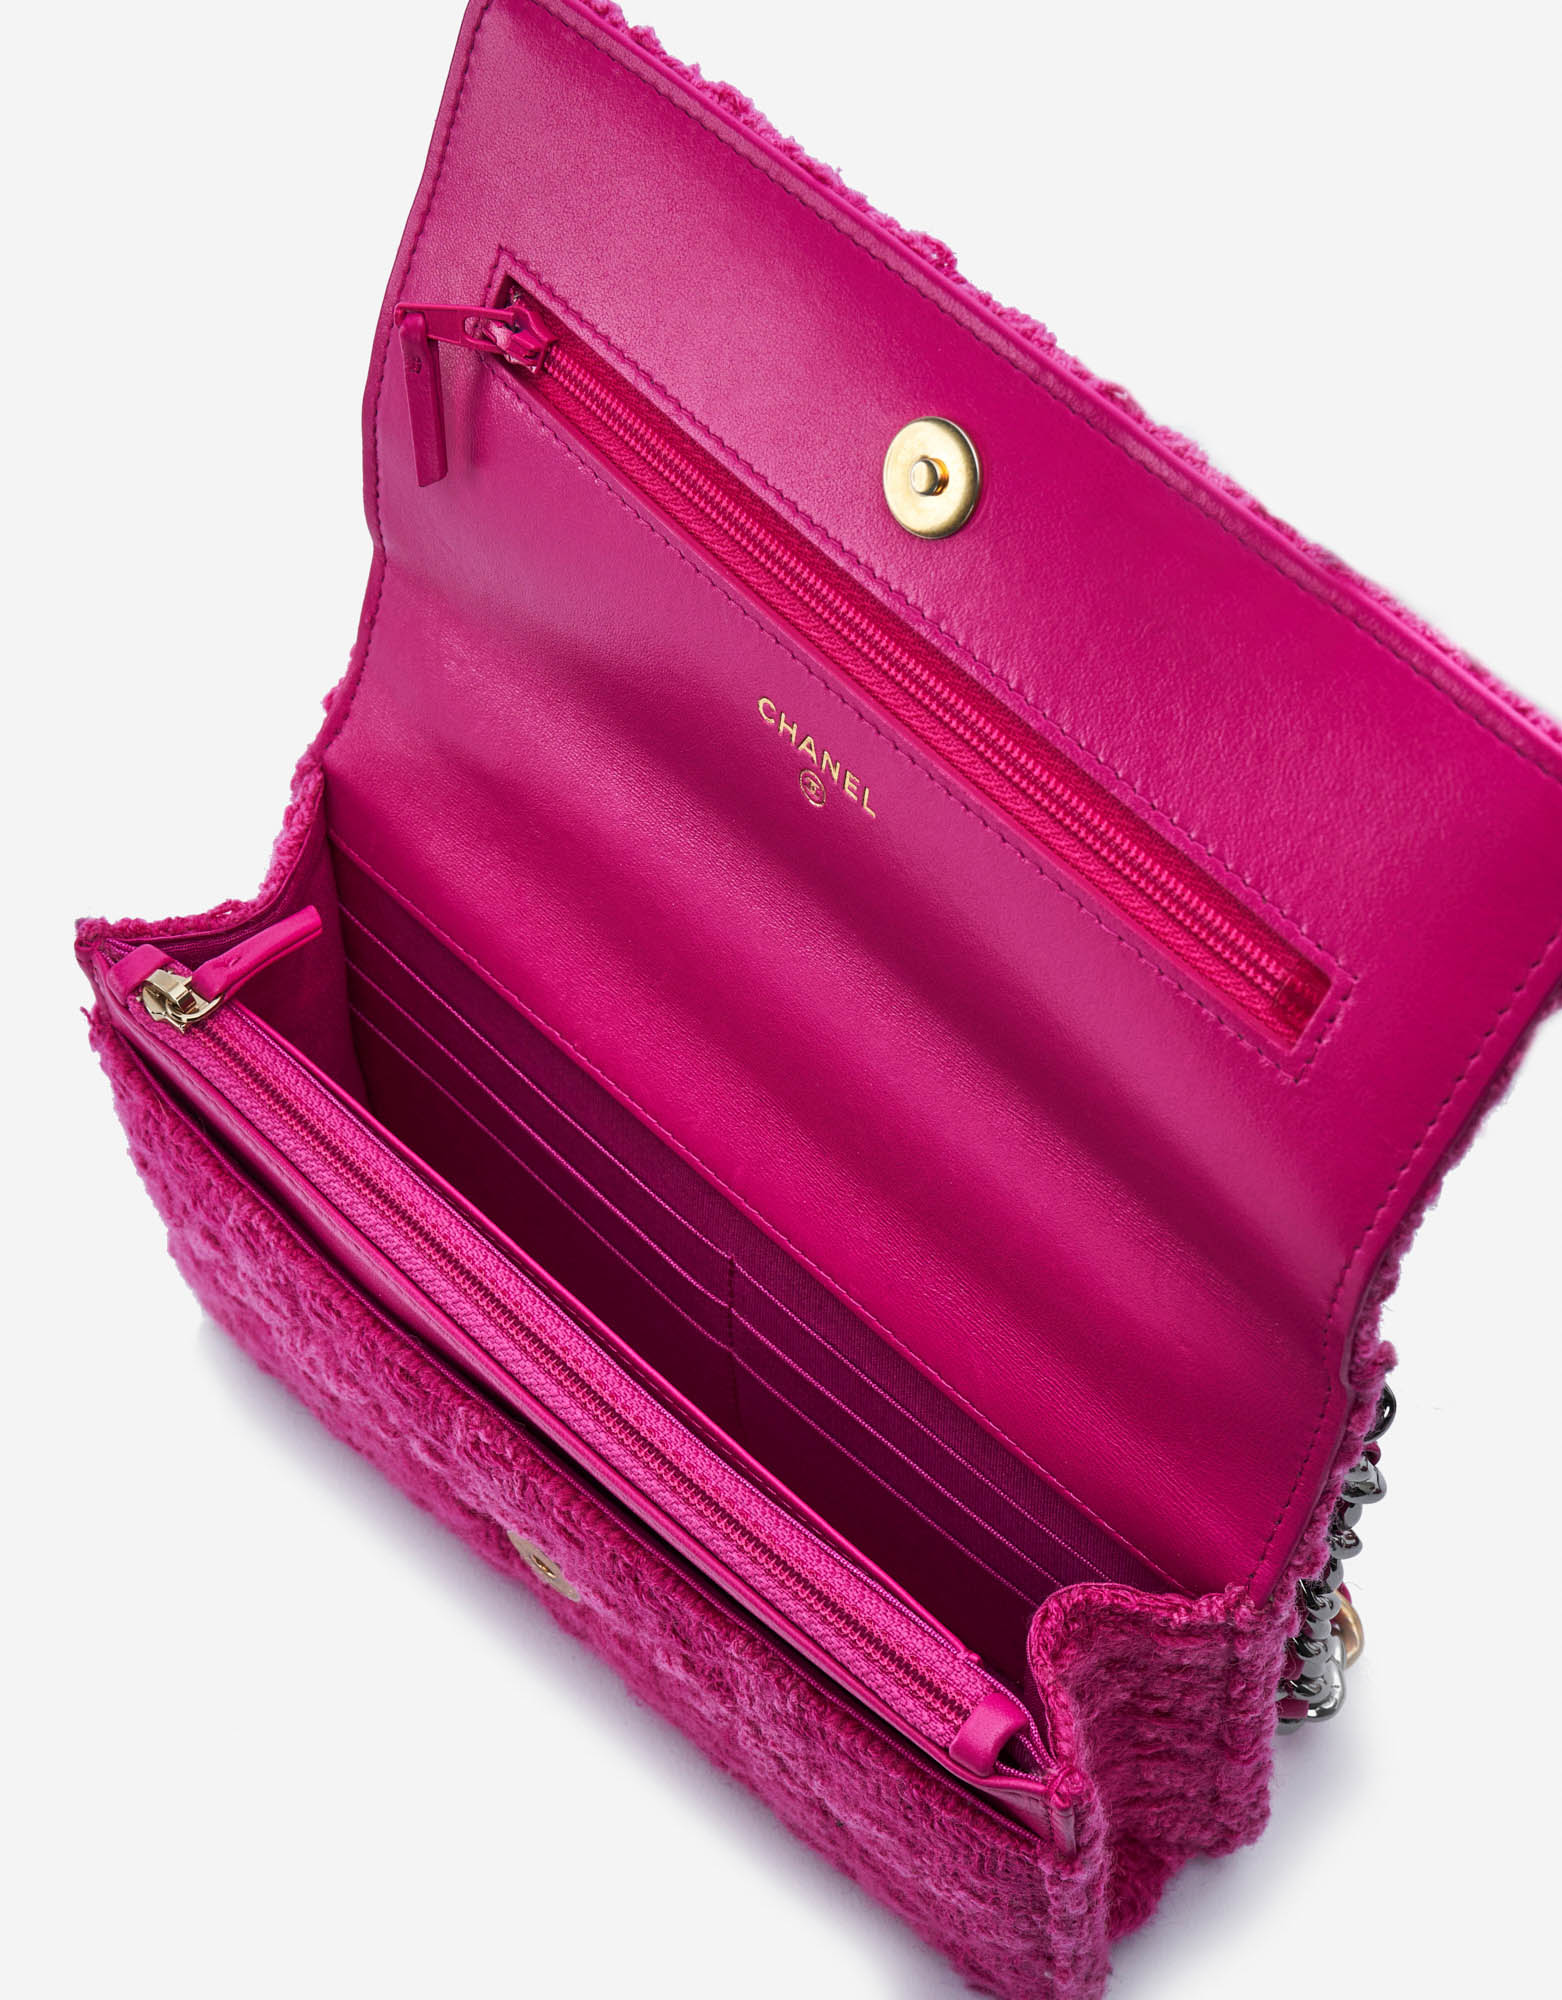 chanel 19 pink bag